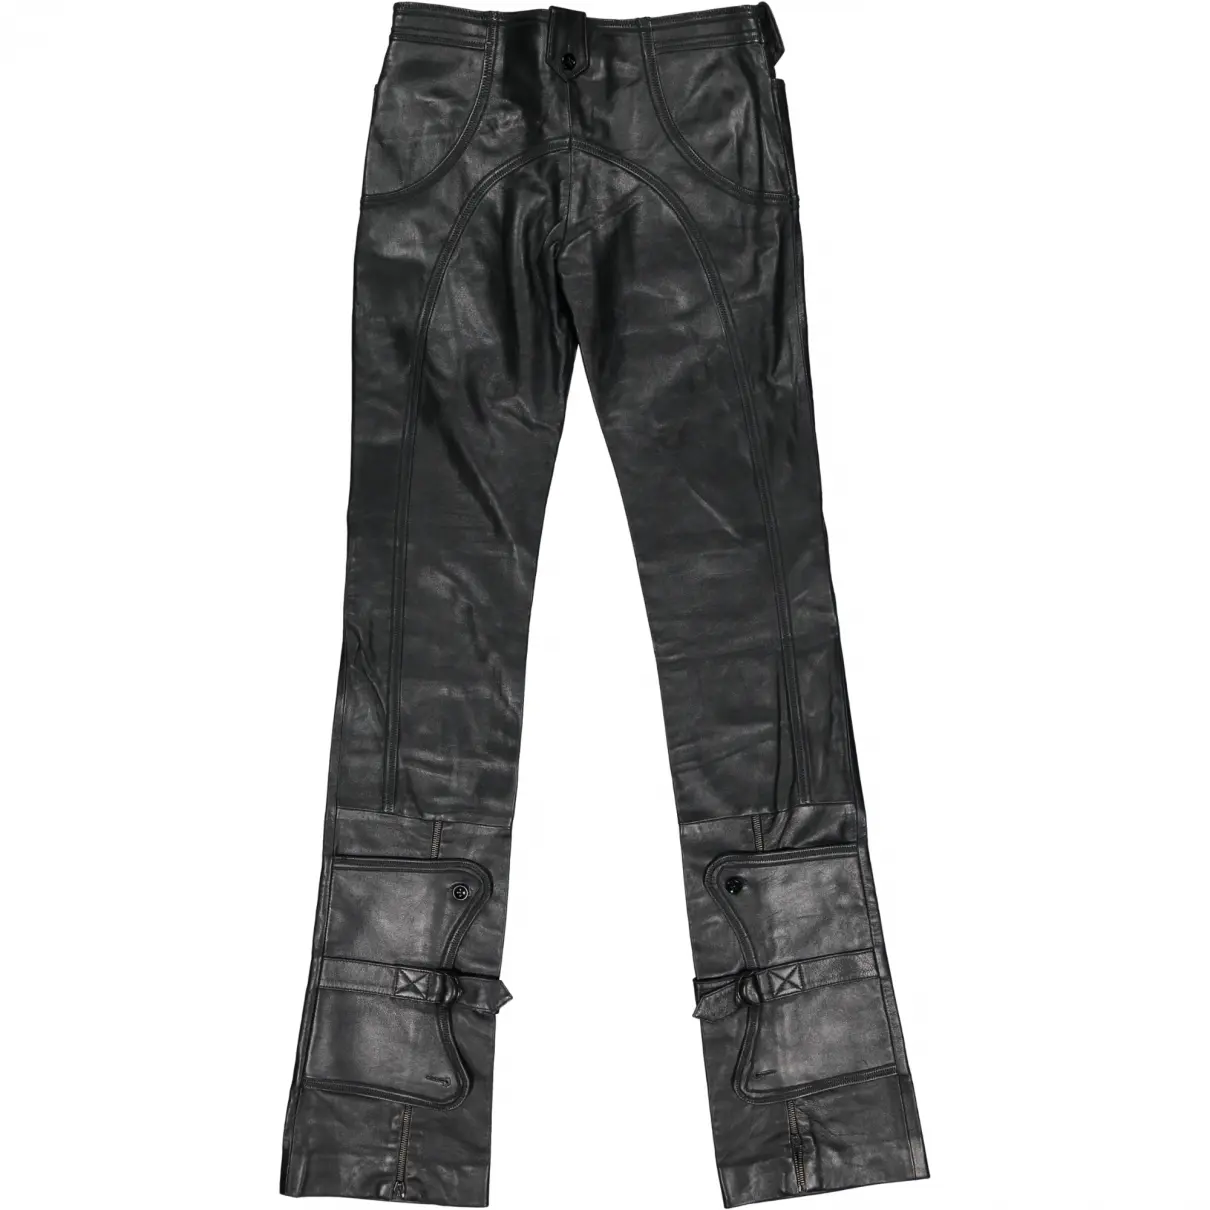 Antonio Berardi Leather trousers for sale